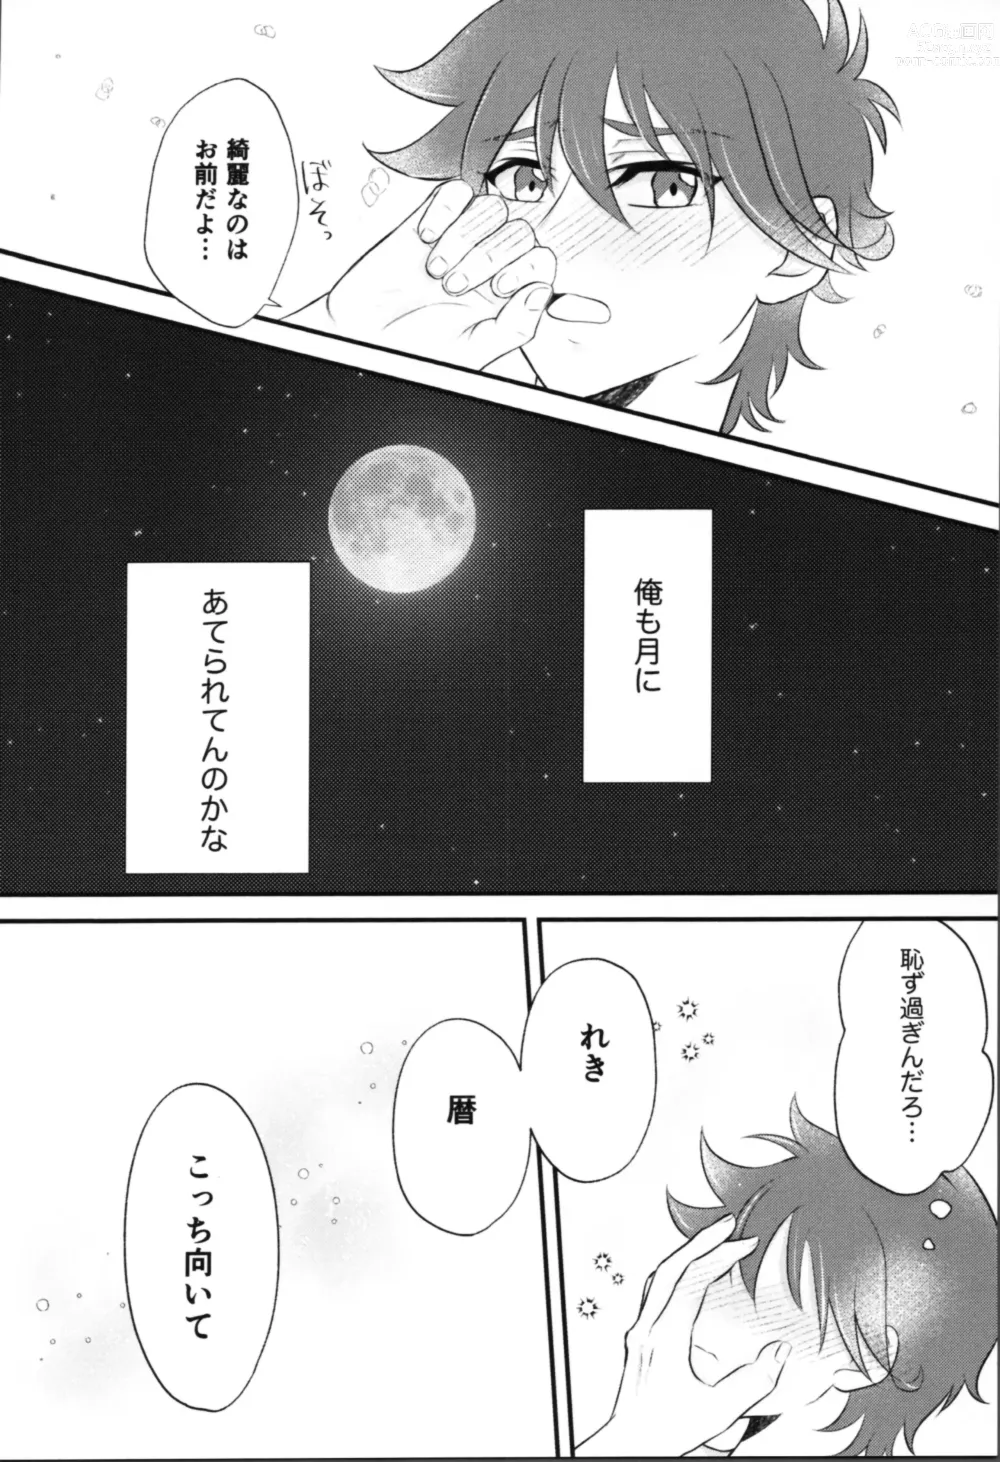 Page 21 of doujinshi Snow moon